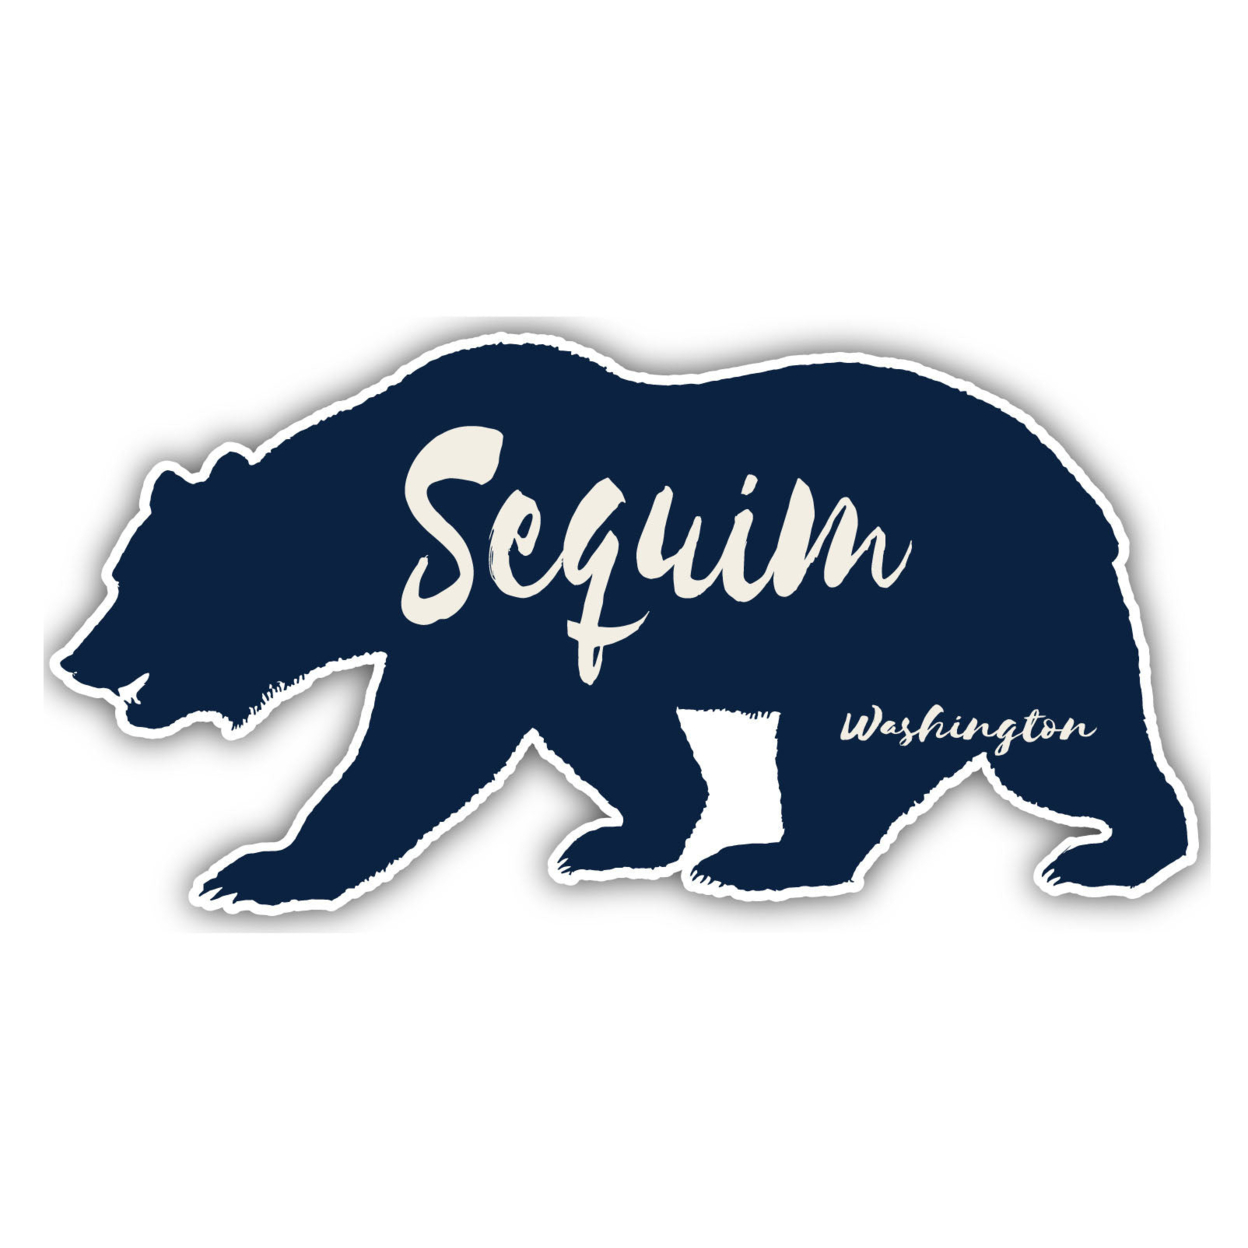 Sequim Washington Souvenir Decorative Stickers (Choose Theme And Size) - Single Unit, 4-Inch, Camp Life